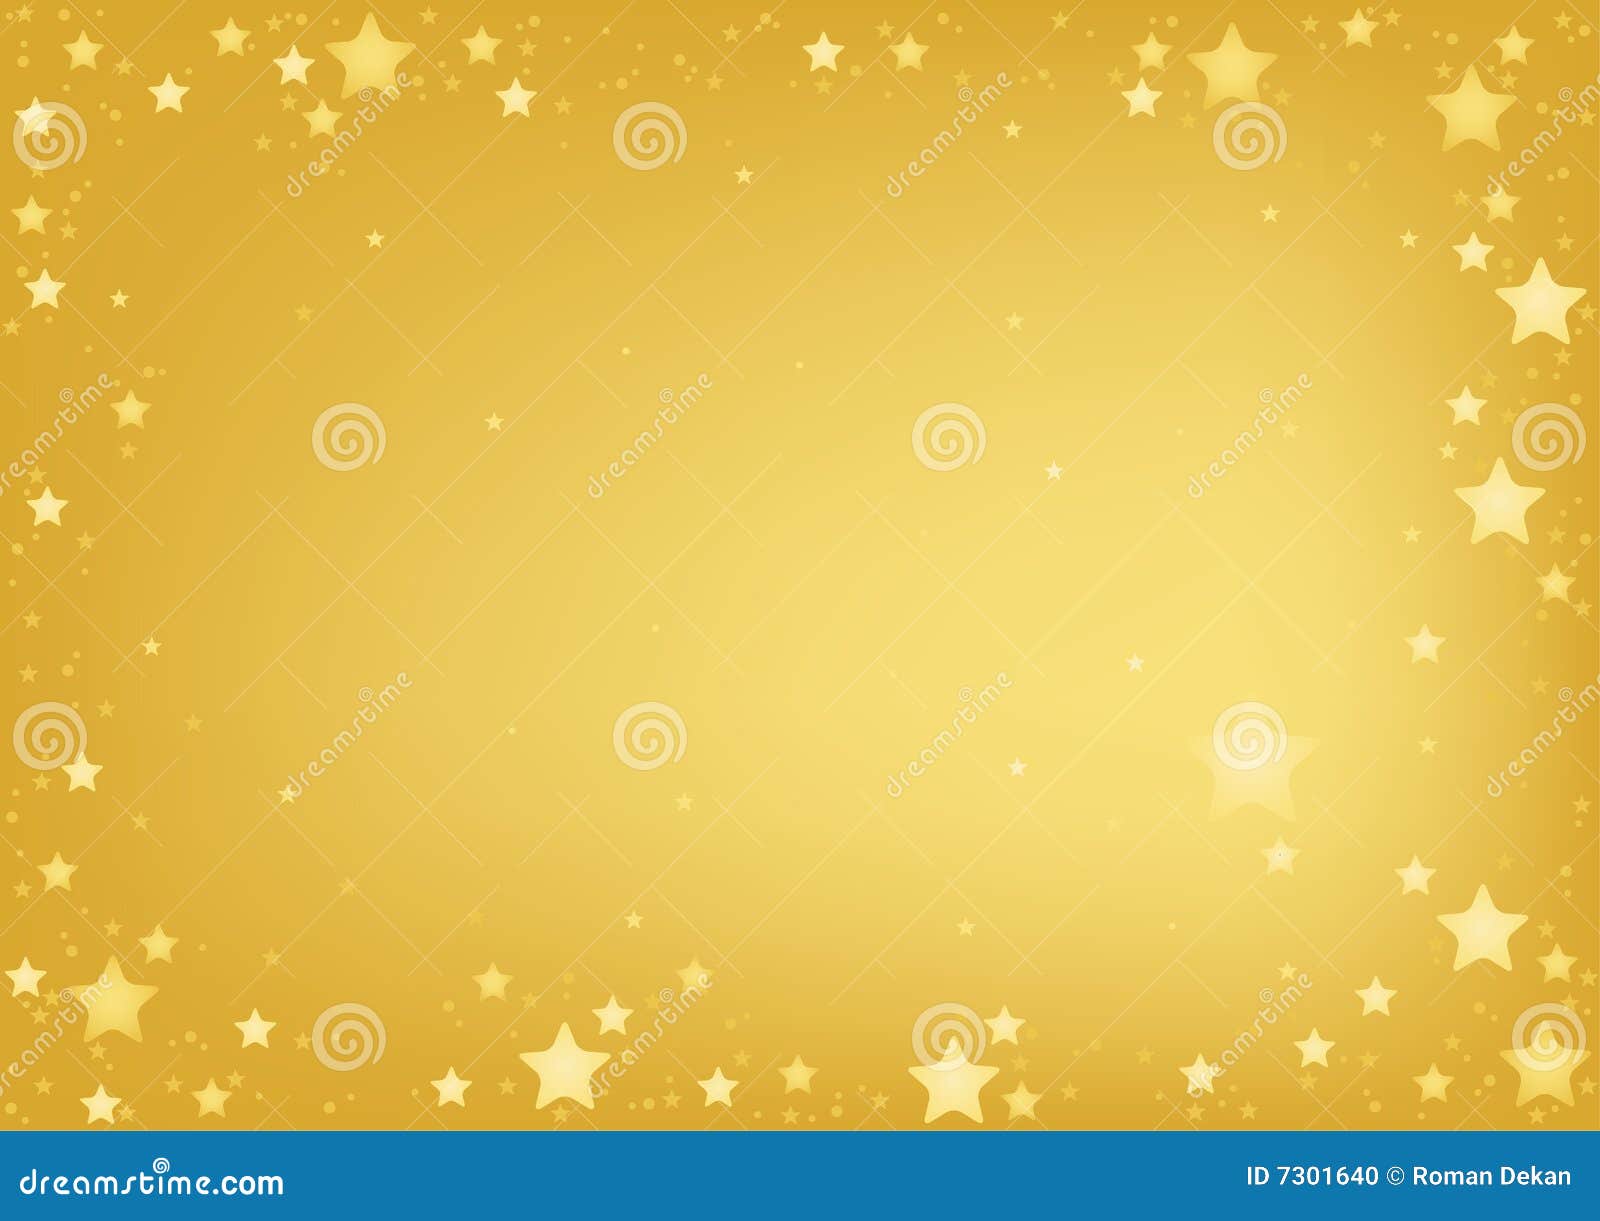 gold stars background